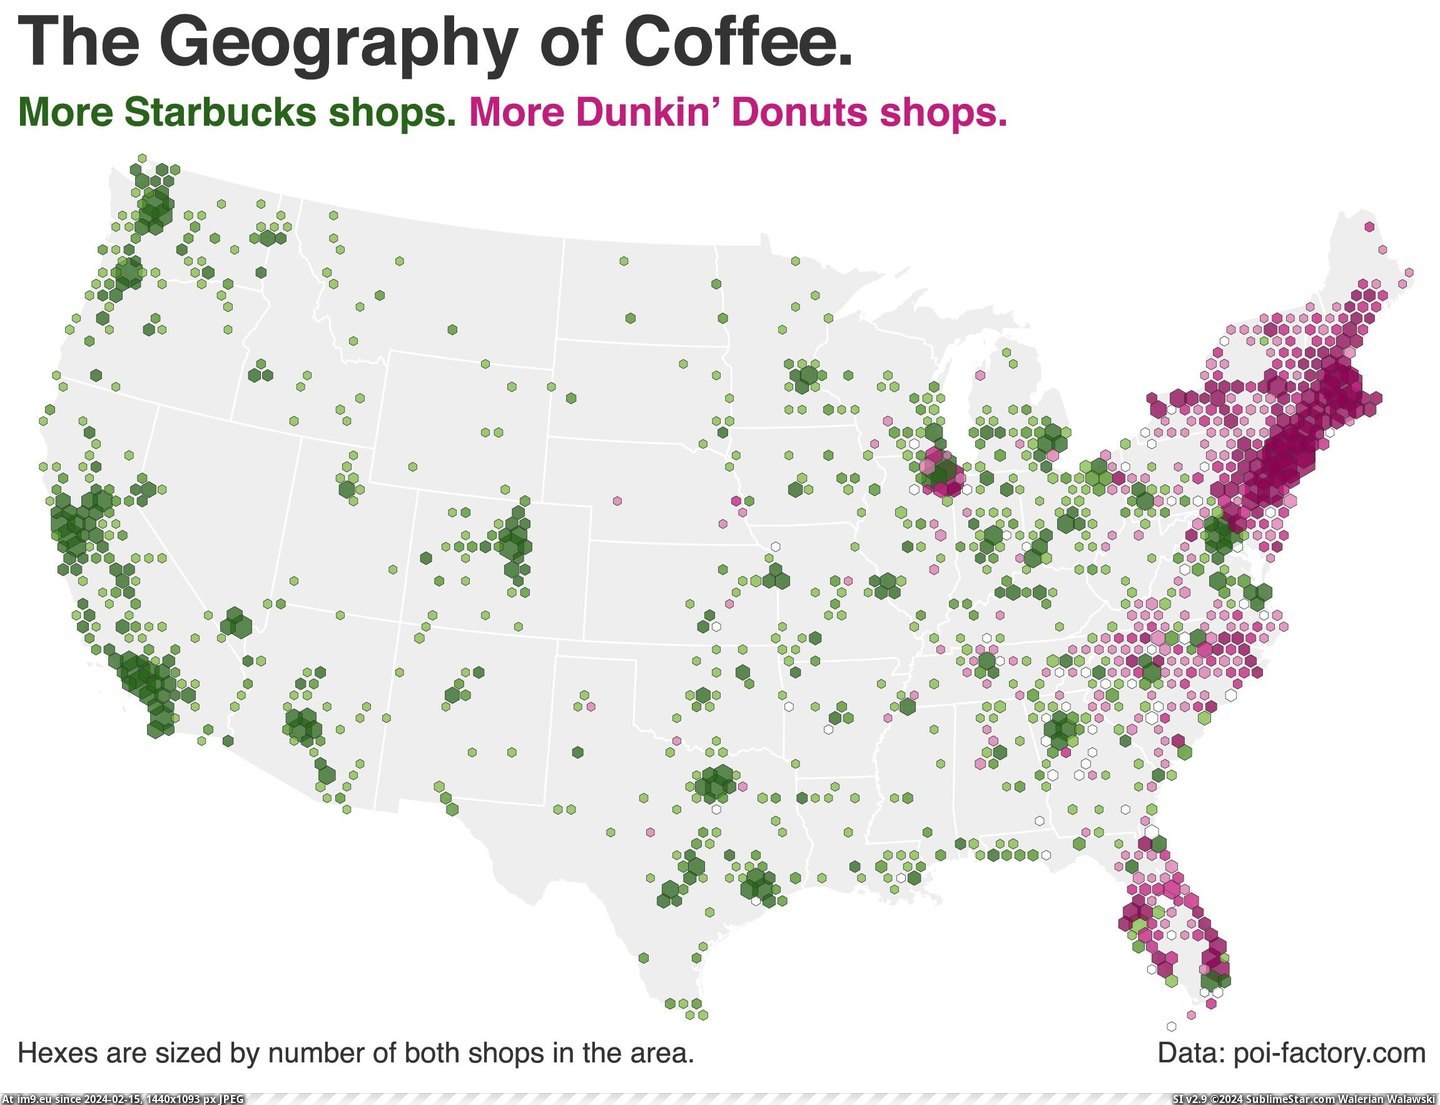 #Coffee #Shop #Geography #Dunkin #Donuts #Starbucks [Dataisbeautiful] Coffee shop geography: Starbucks vs. Dunkin' Donuts Pic. (Obraz z album My r/DATAISBEAUTIFUL favs))